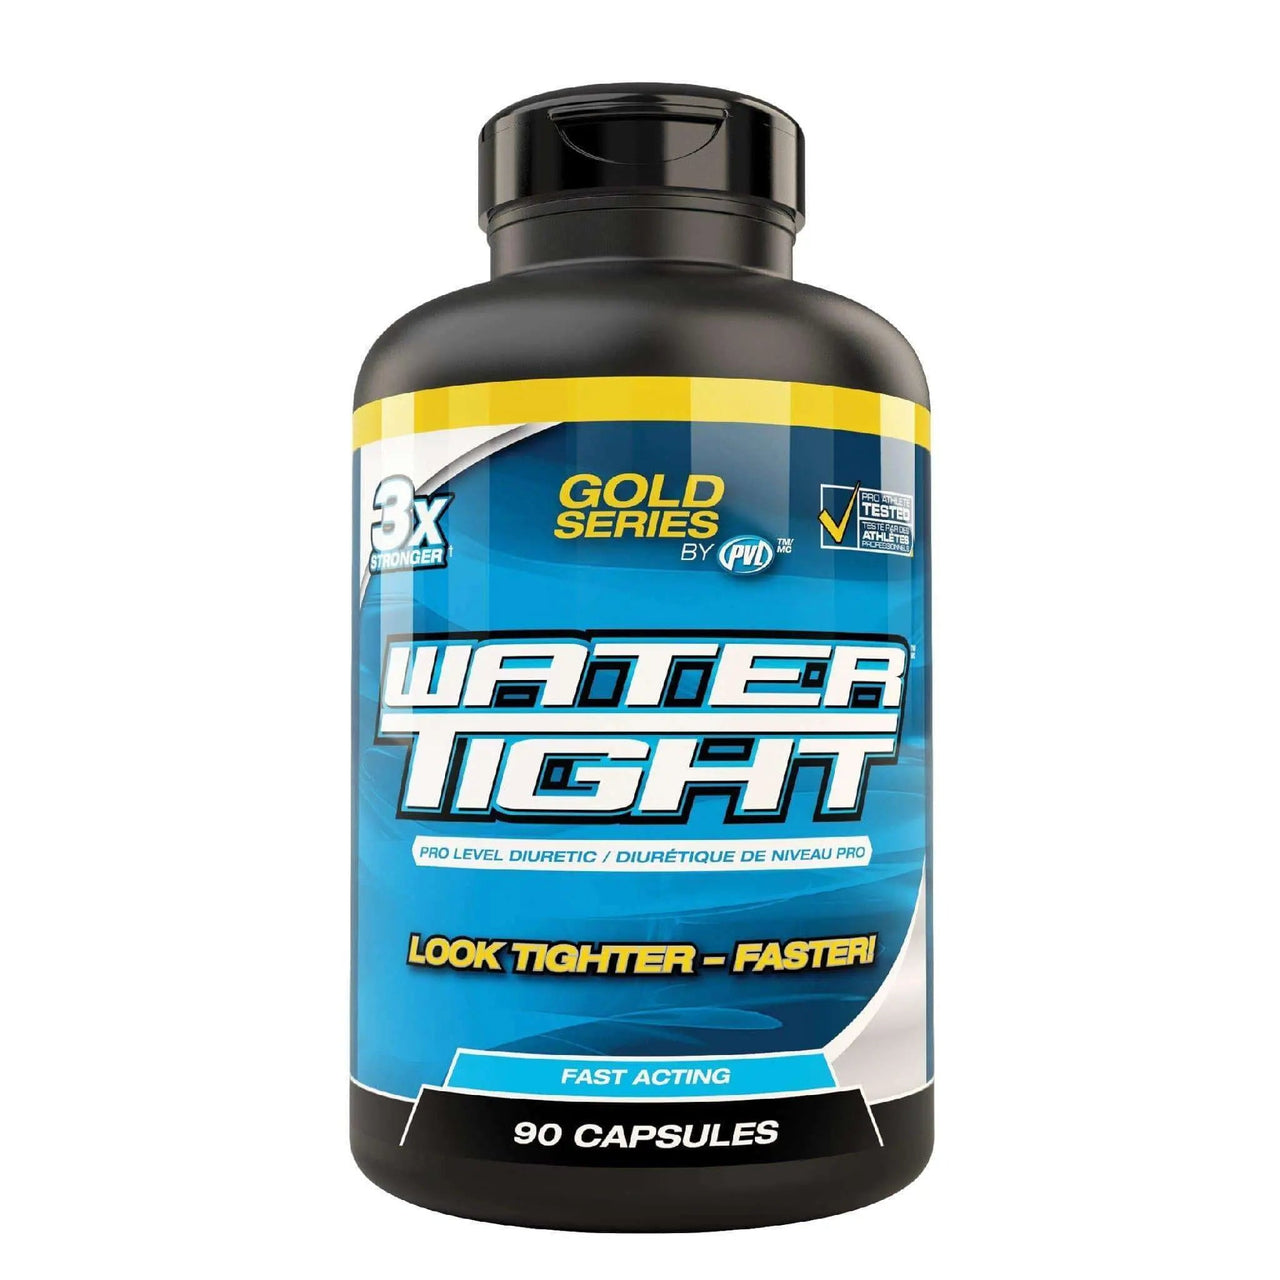 PVL WaterTight 90 Capsules - Nutrition Plus